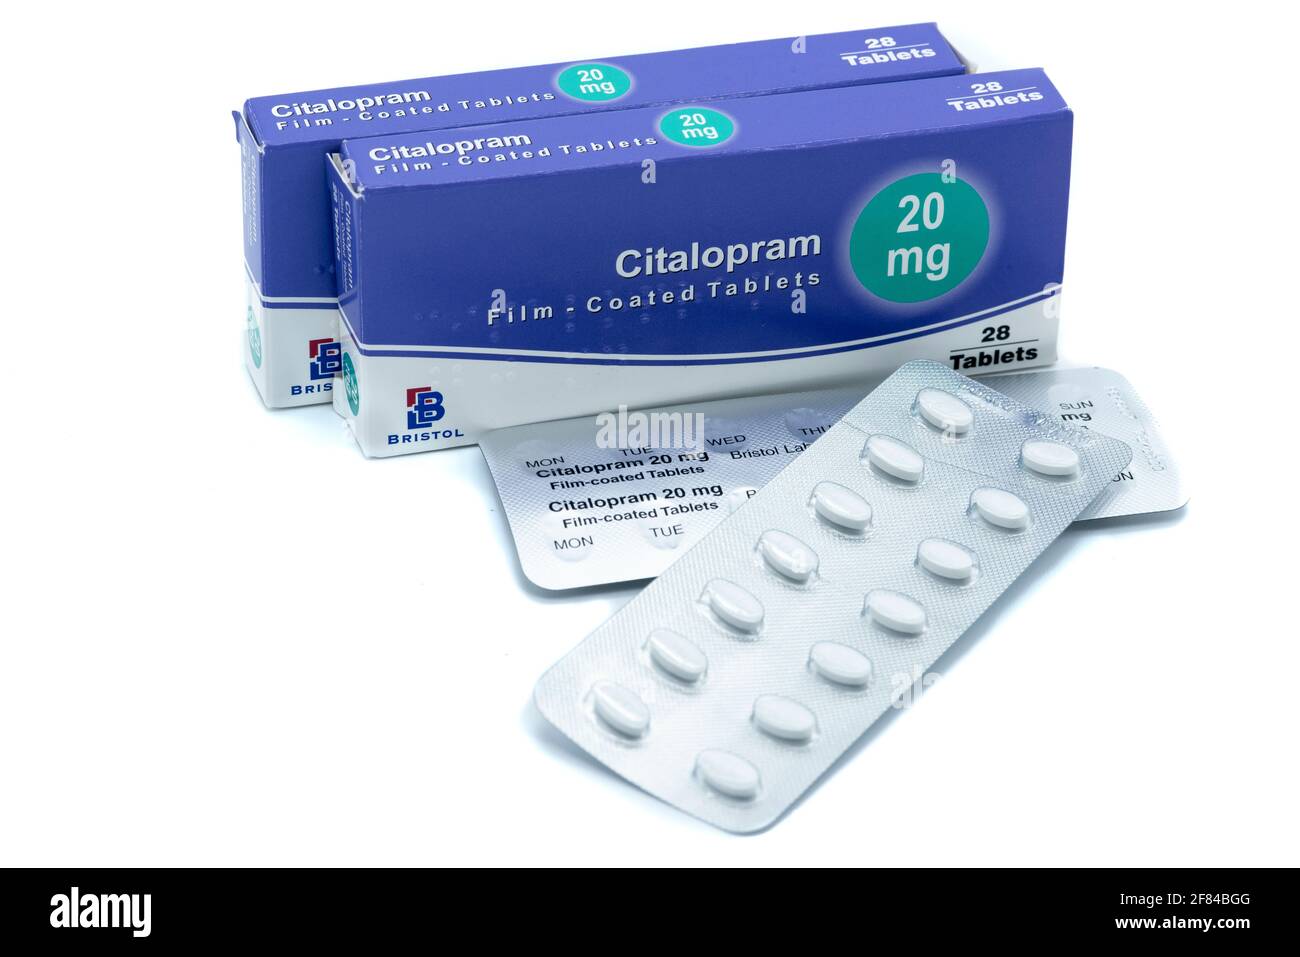 Citalopram, a Selective Serotonin Reuptake Inhibitor (SSRI) anti-depressant. Stock Photo